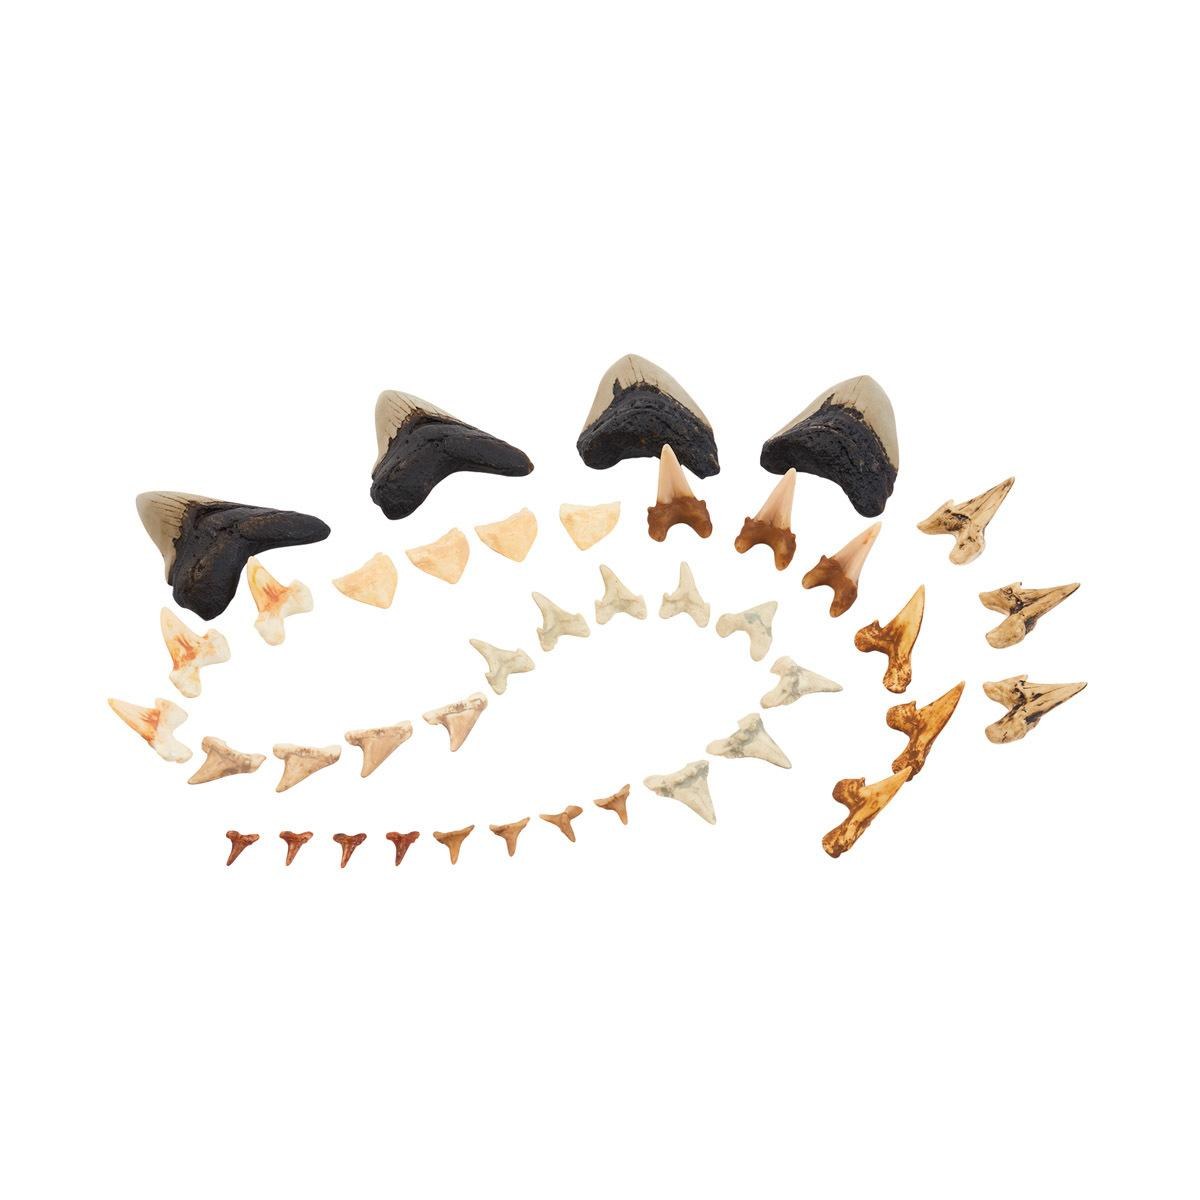 Kaplan Early Learning Company Super Shark Teeth Set - 40 Pieces